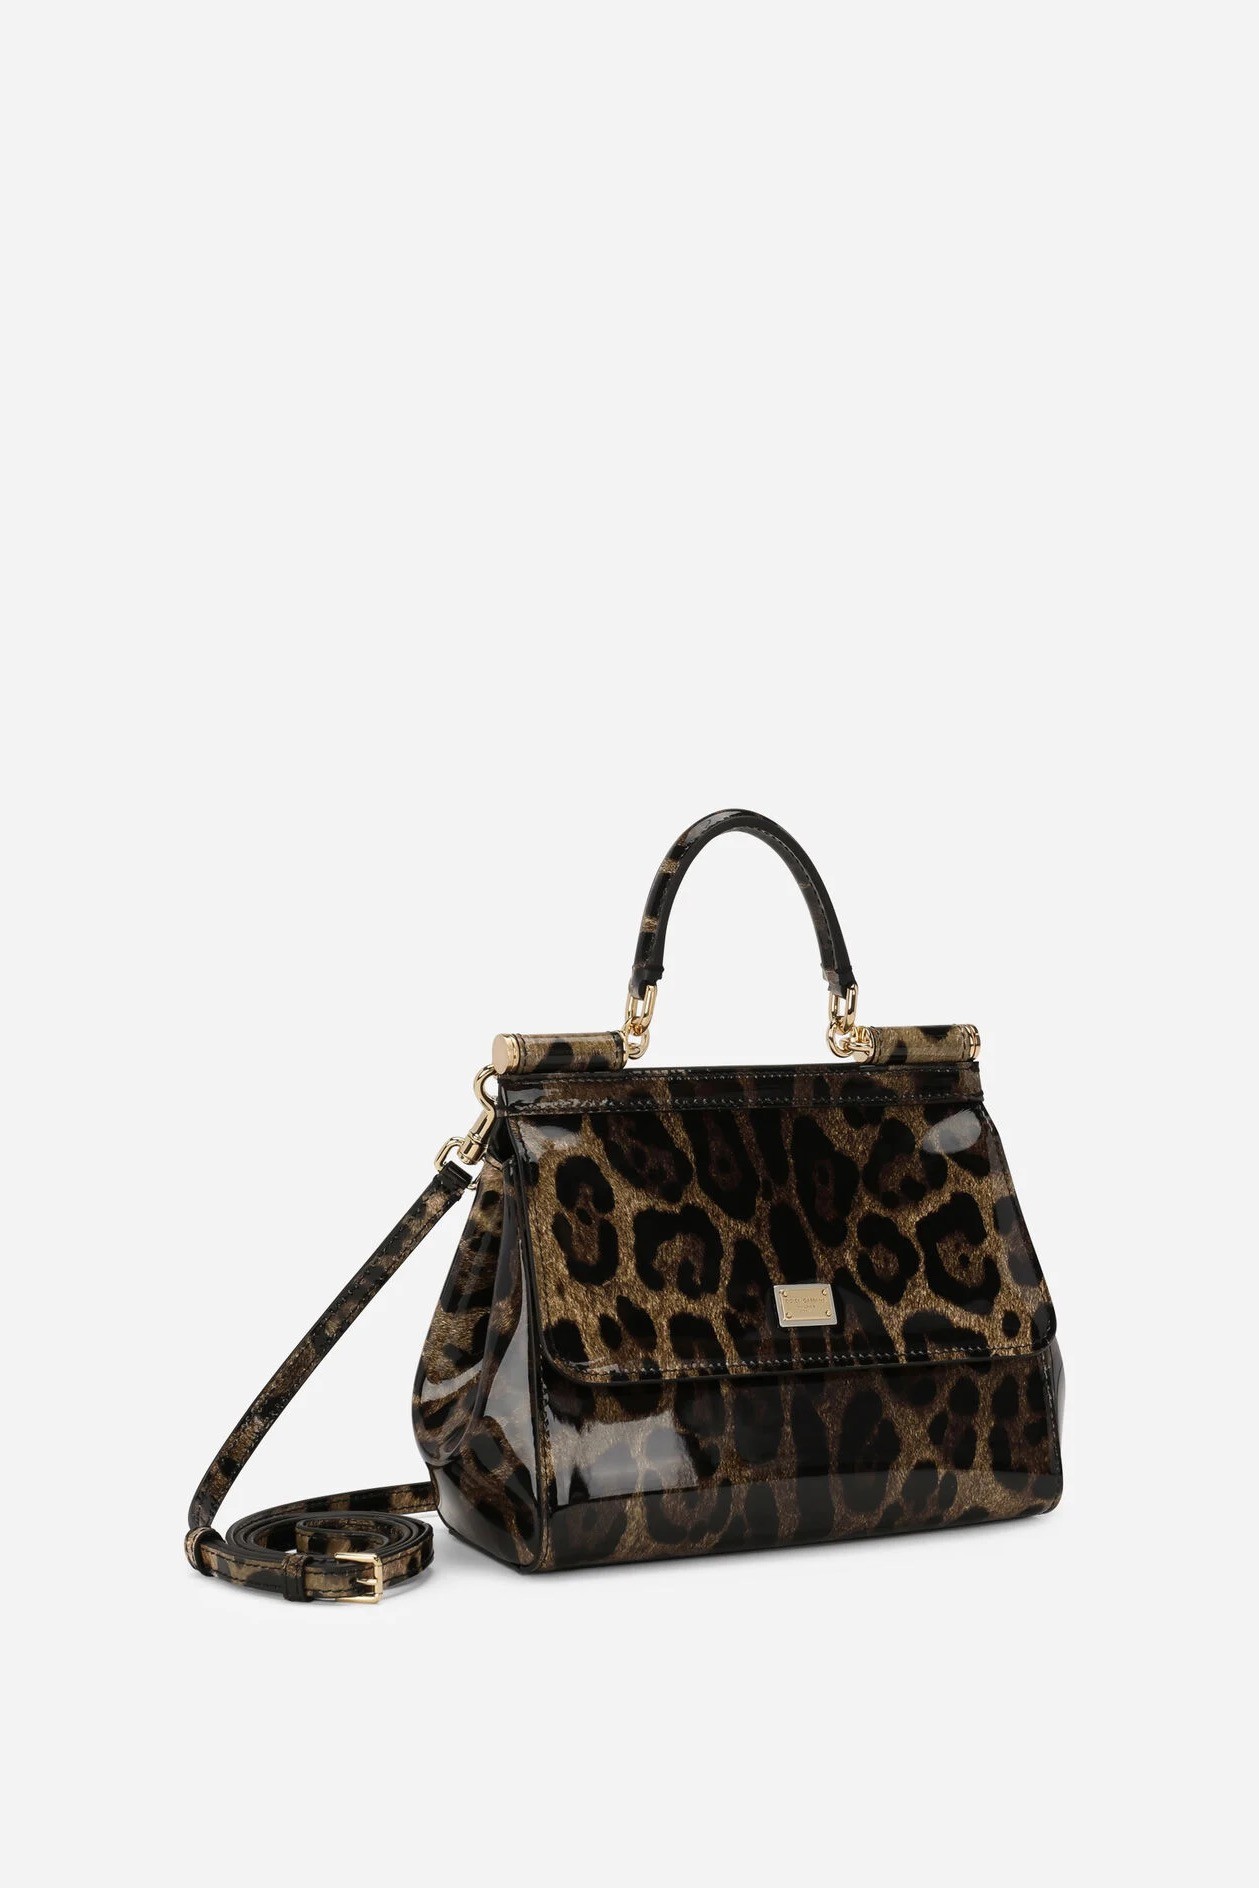 Dolce & Gabbana - Medium Sicily Handbag - Animal Print